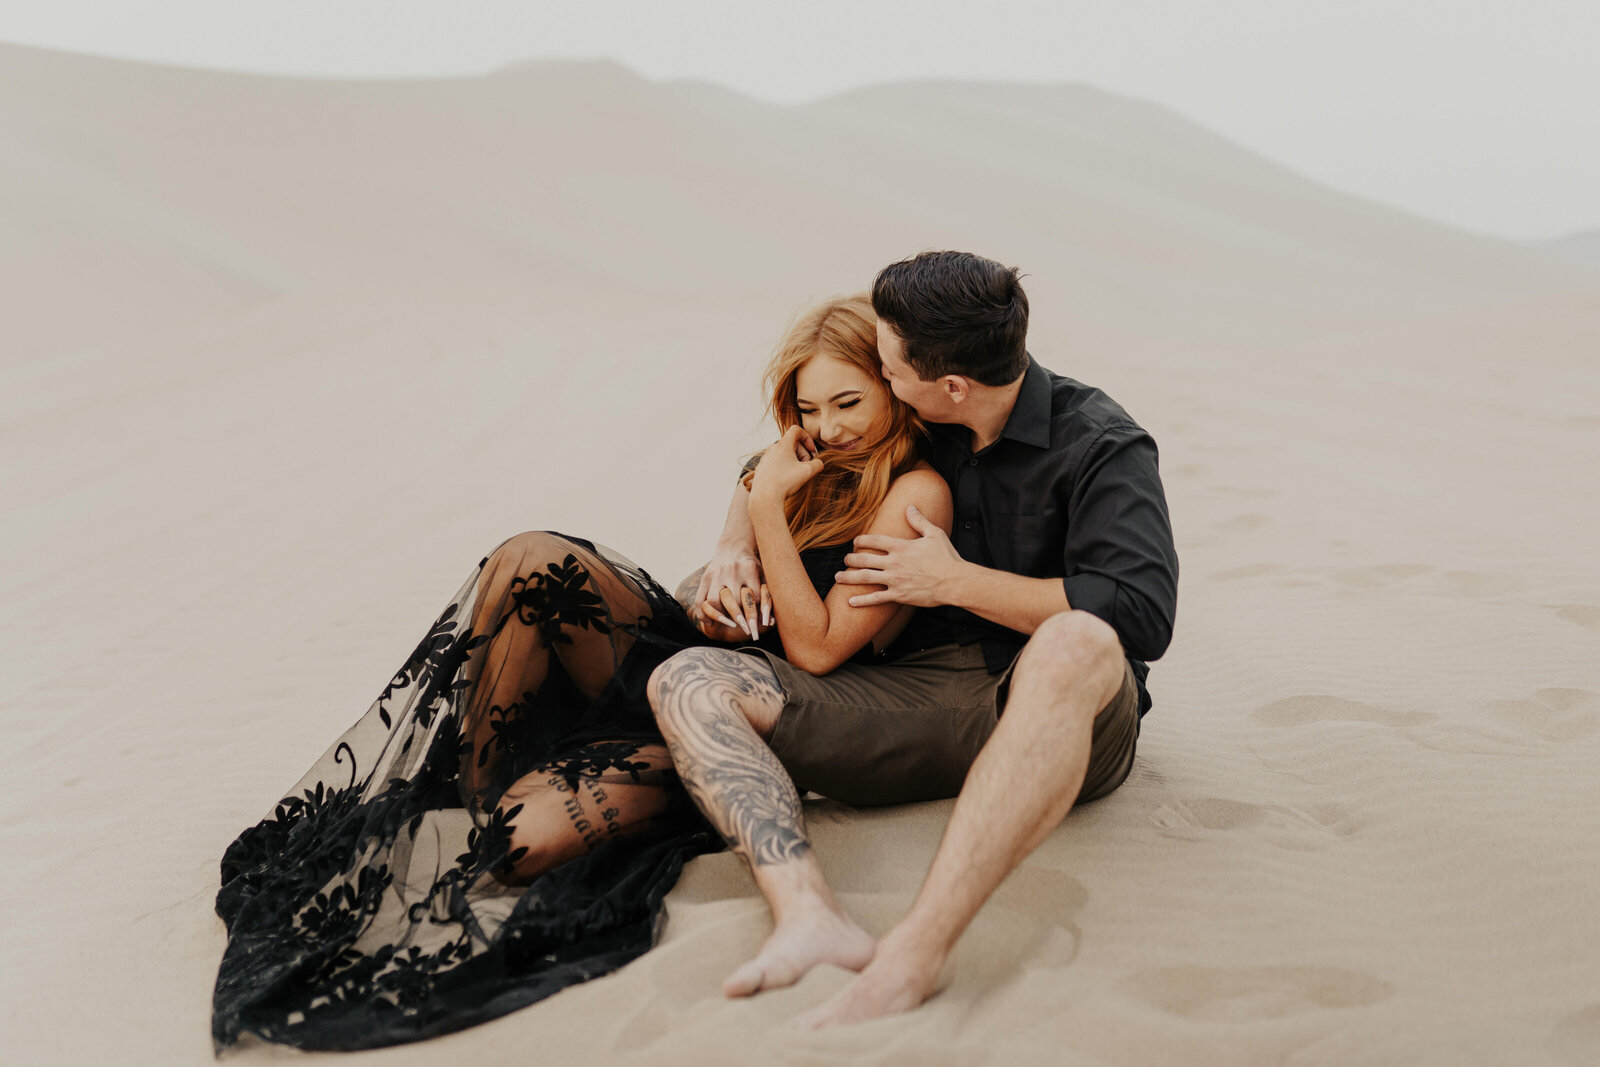 Sand Dunes Couples Photos - Raquel King Photography63